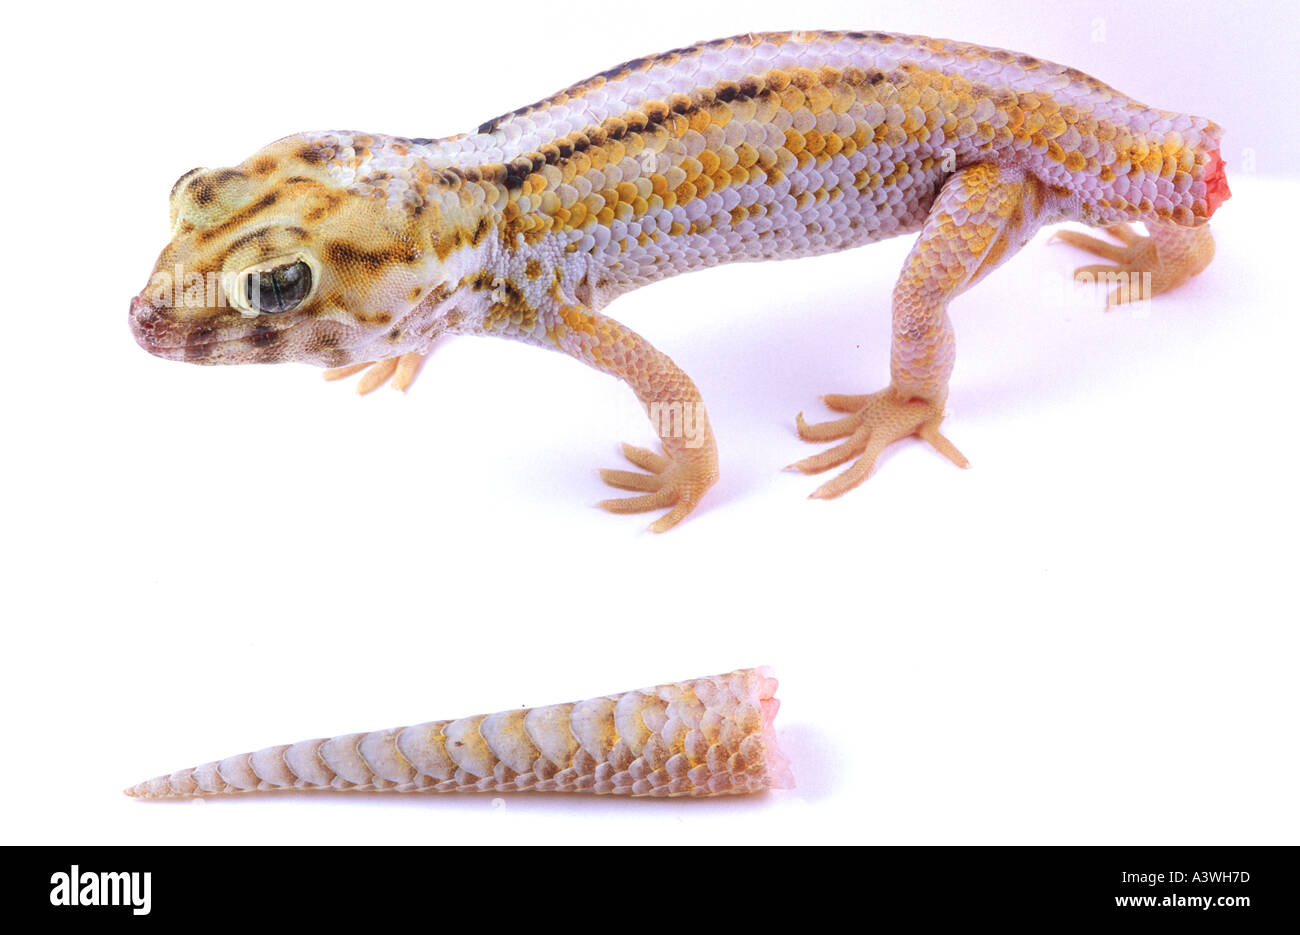 Gecko teratoscincus scincus China with autotomized tail Stock Photo